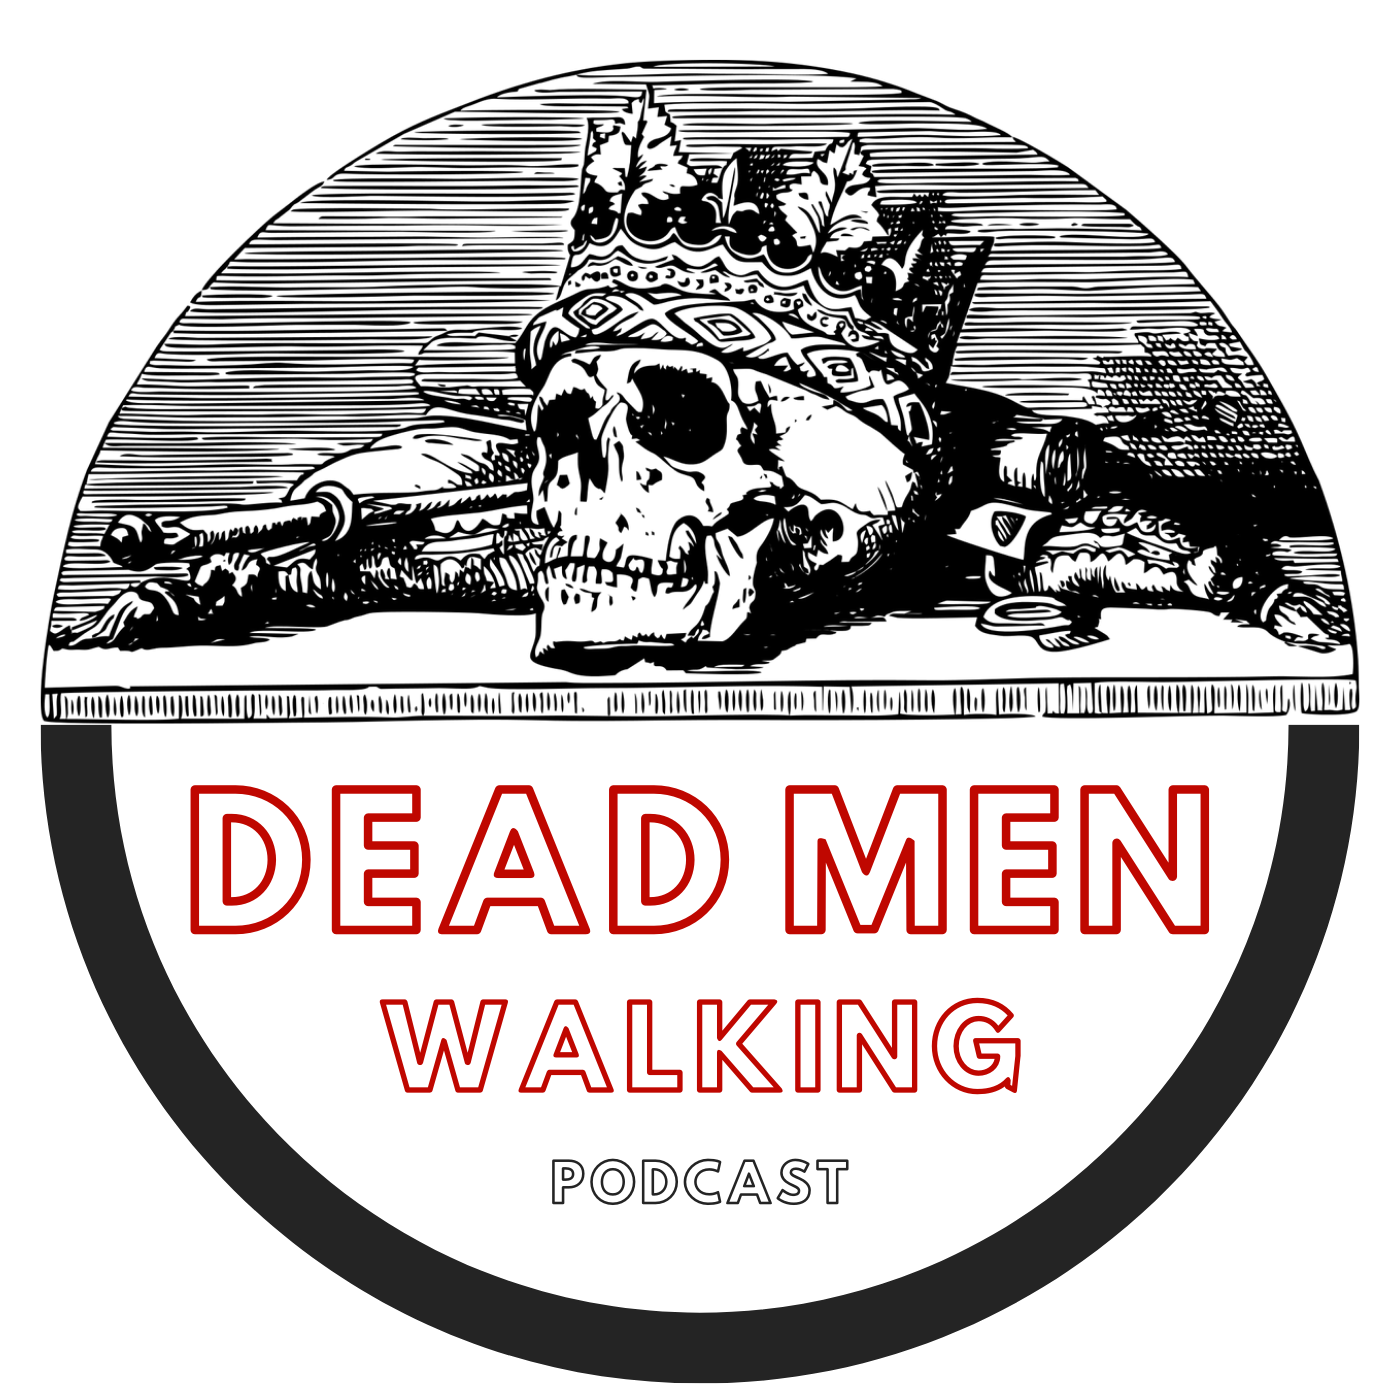 Christian Responsibility: Andrew Rappaport, Aaron Brewster, Dan Kreft, Jay Miller, & Dominick Grimaldi [Dead Men Walking Podcast]